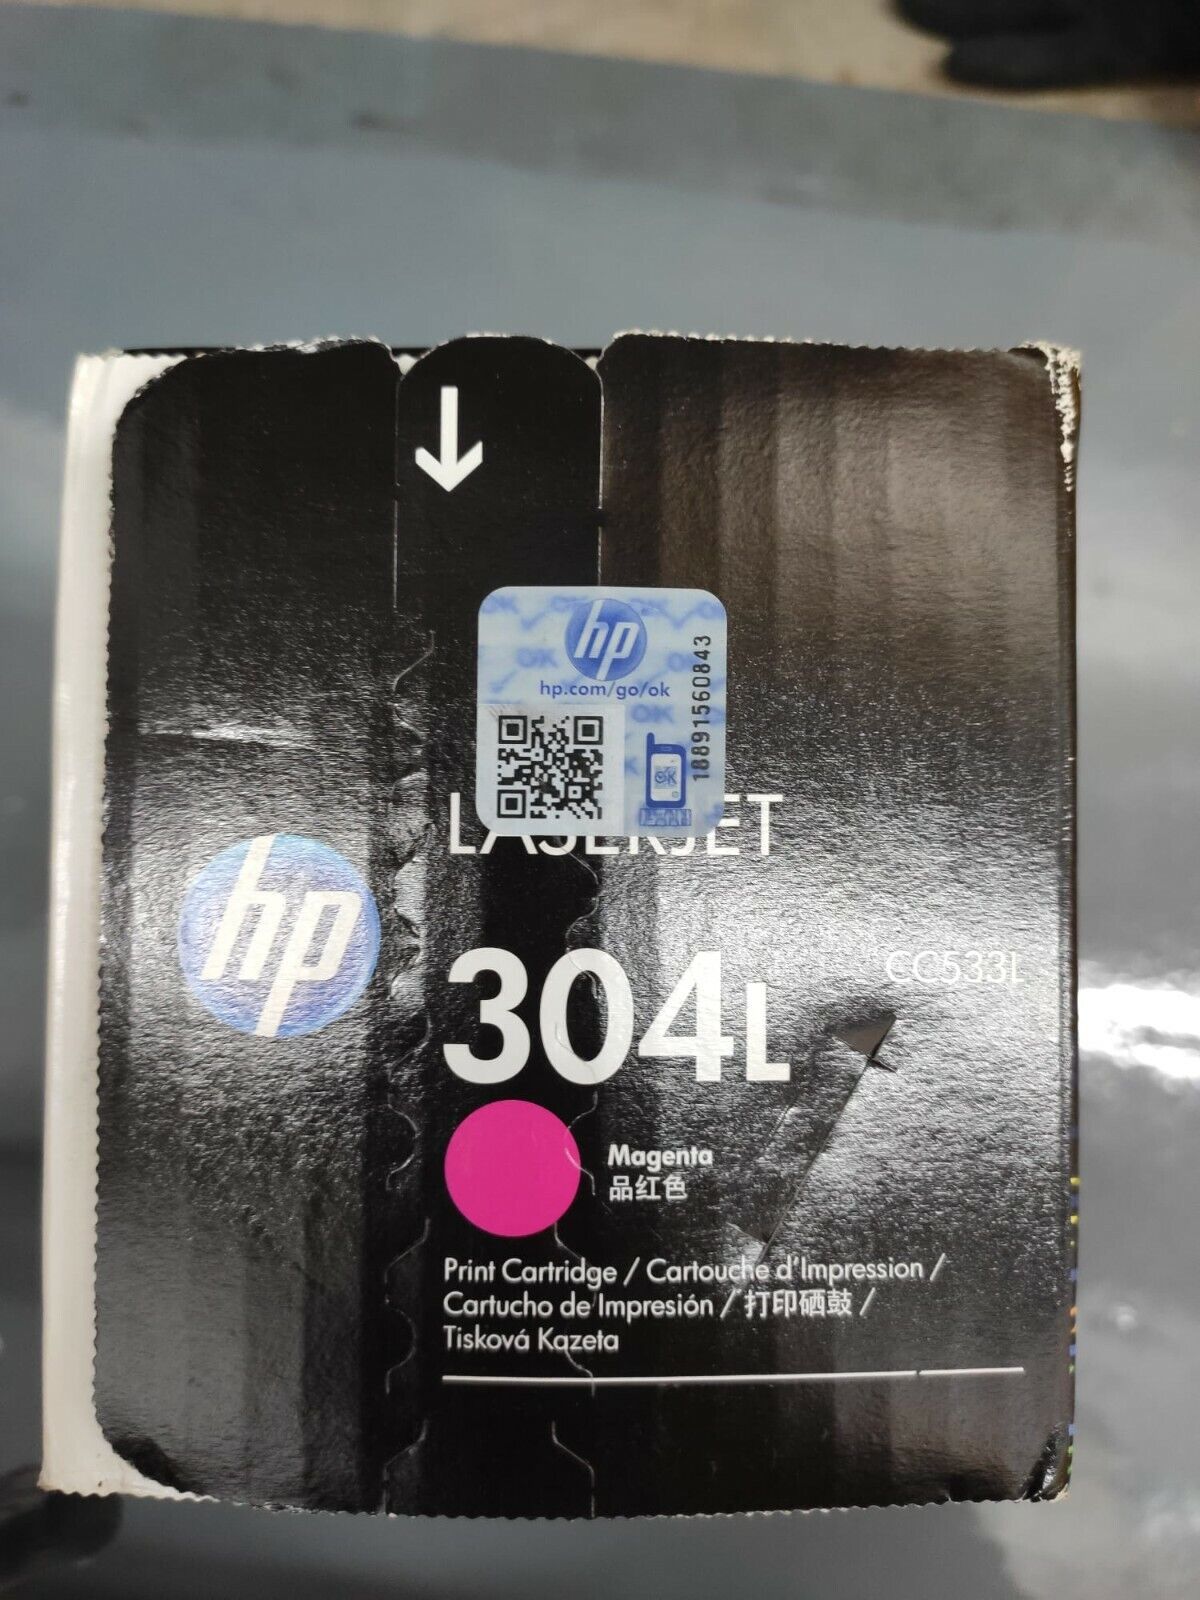 Genuine HP 304A/304L Magenta Toner Cartridge (CC533A) - FREE UK DELIVERY